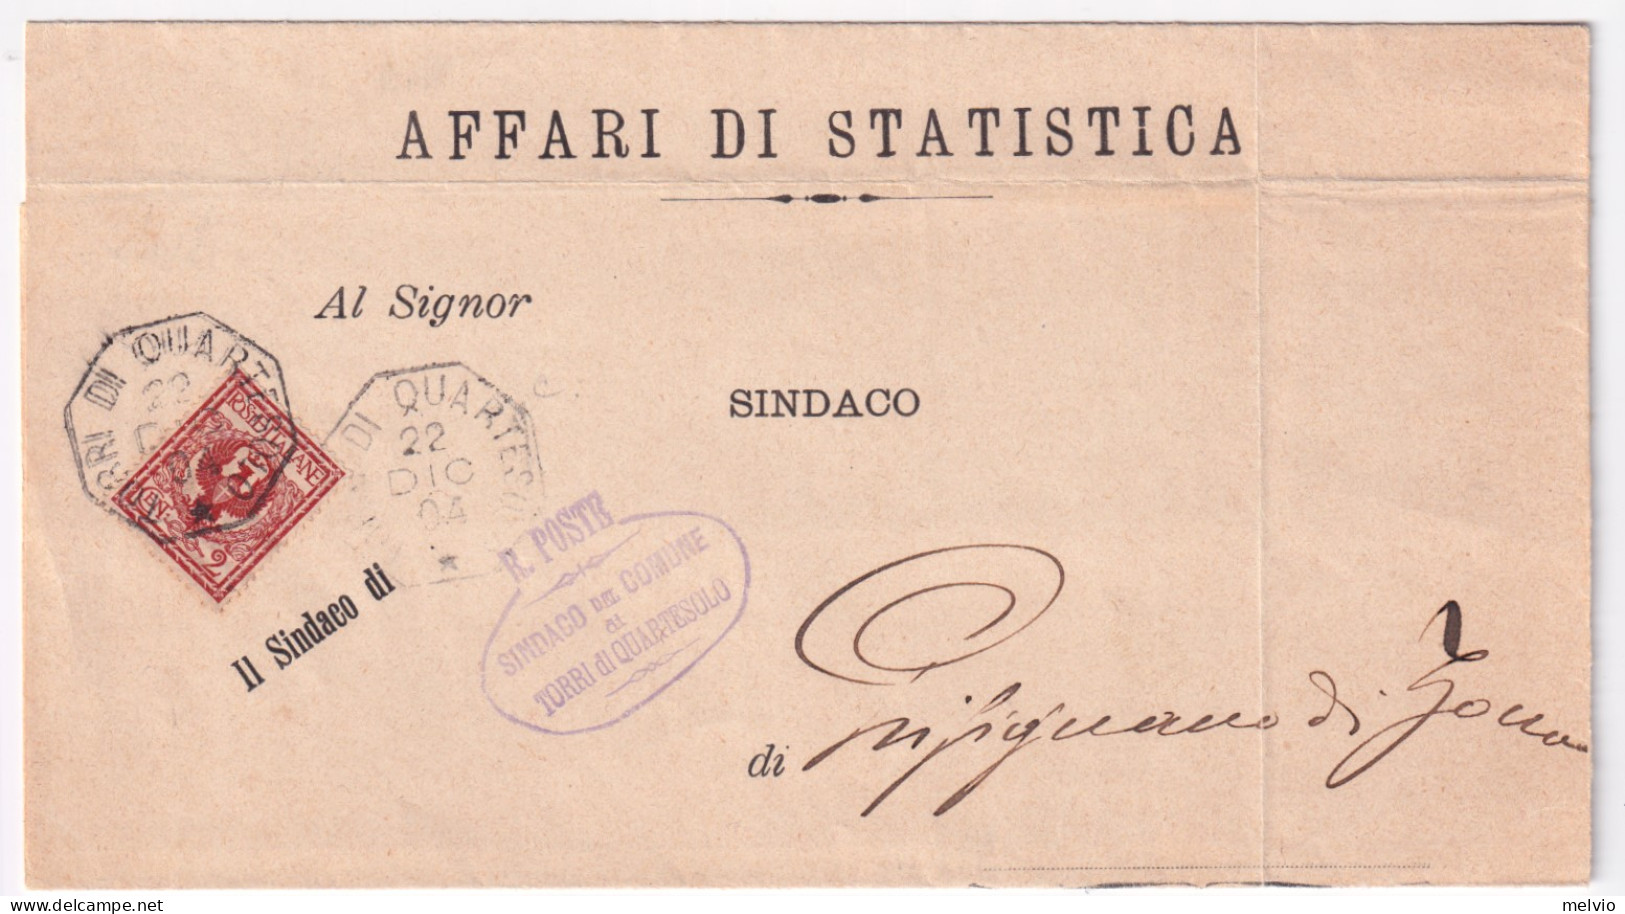 1894-TORRI DI QUARTESOLO Ottagonale Collettoria (22.12) Su Piego - Marcophilie